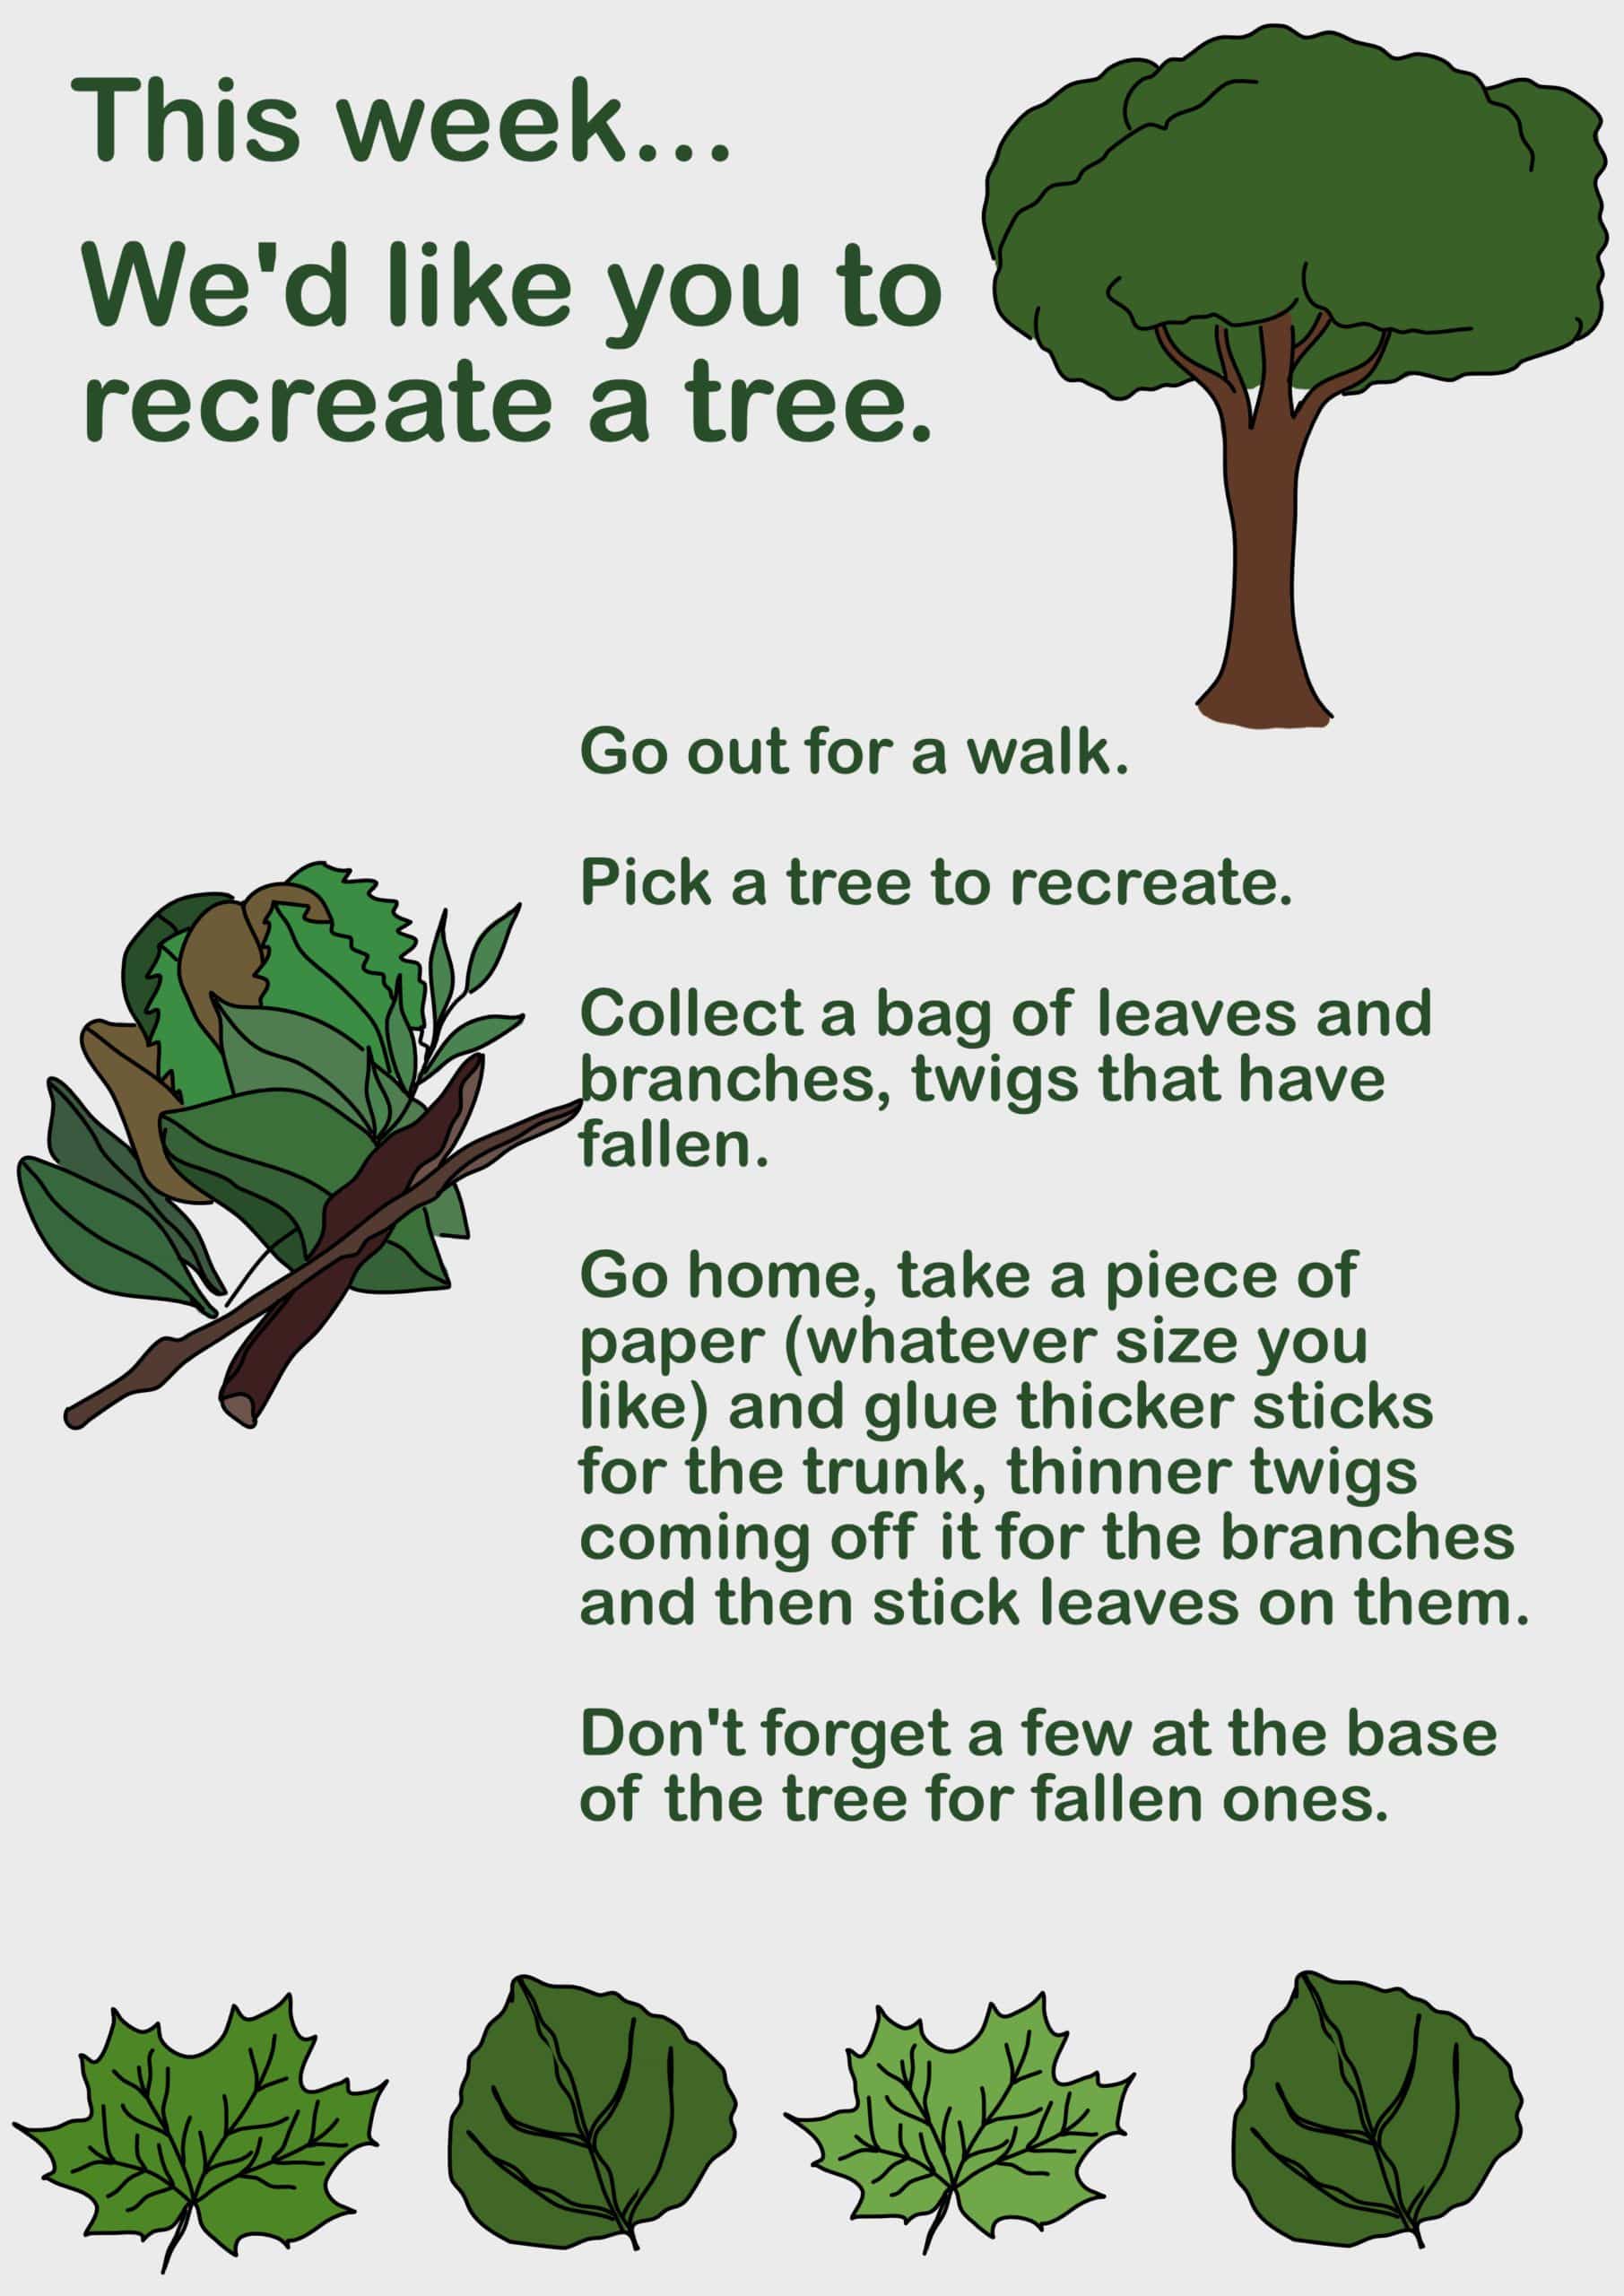 recreate a tree challenge